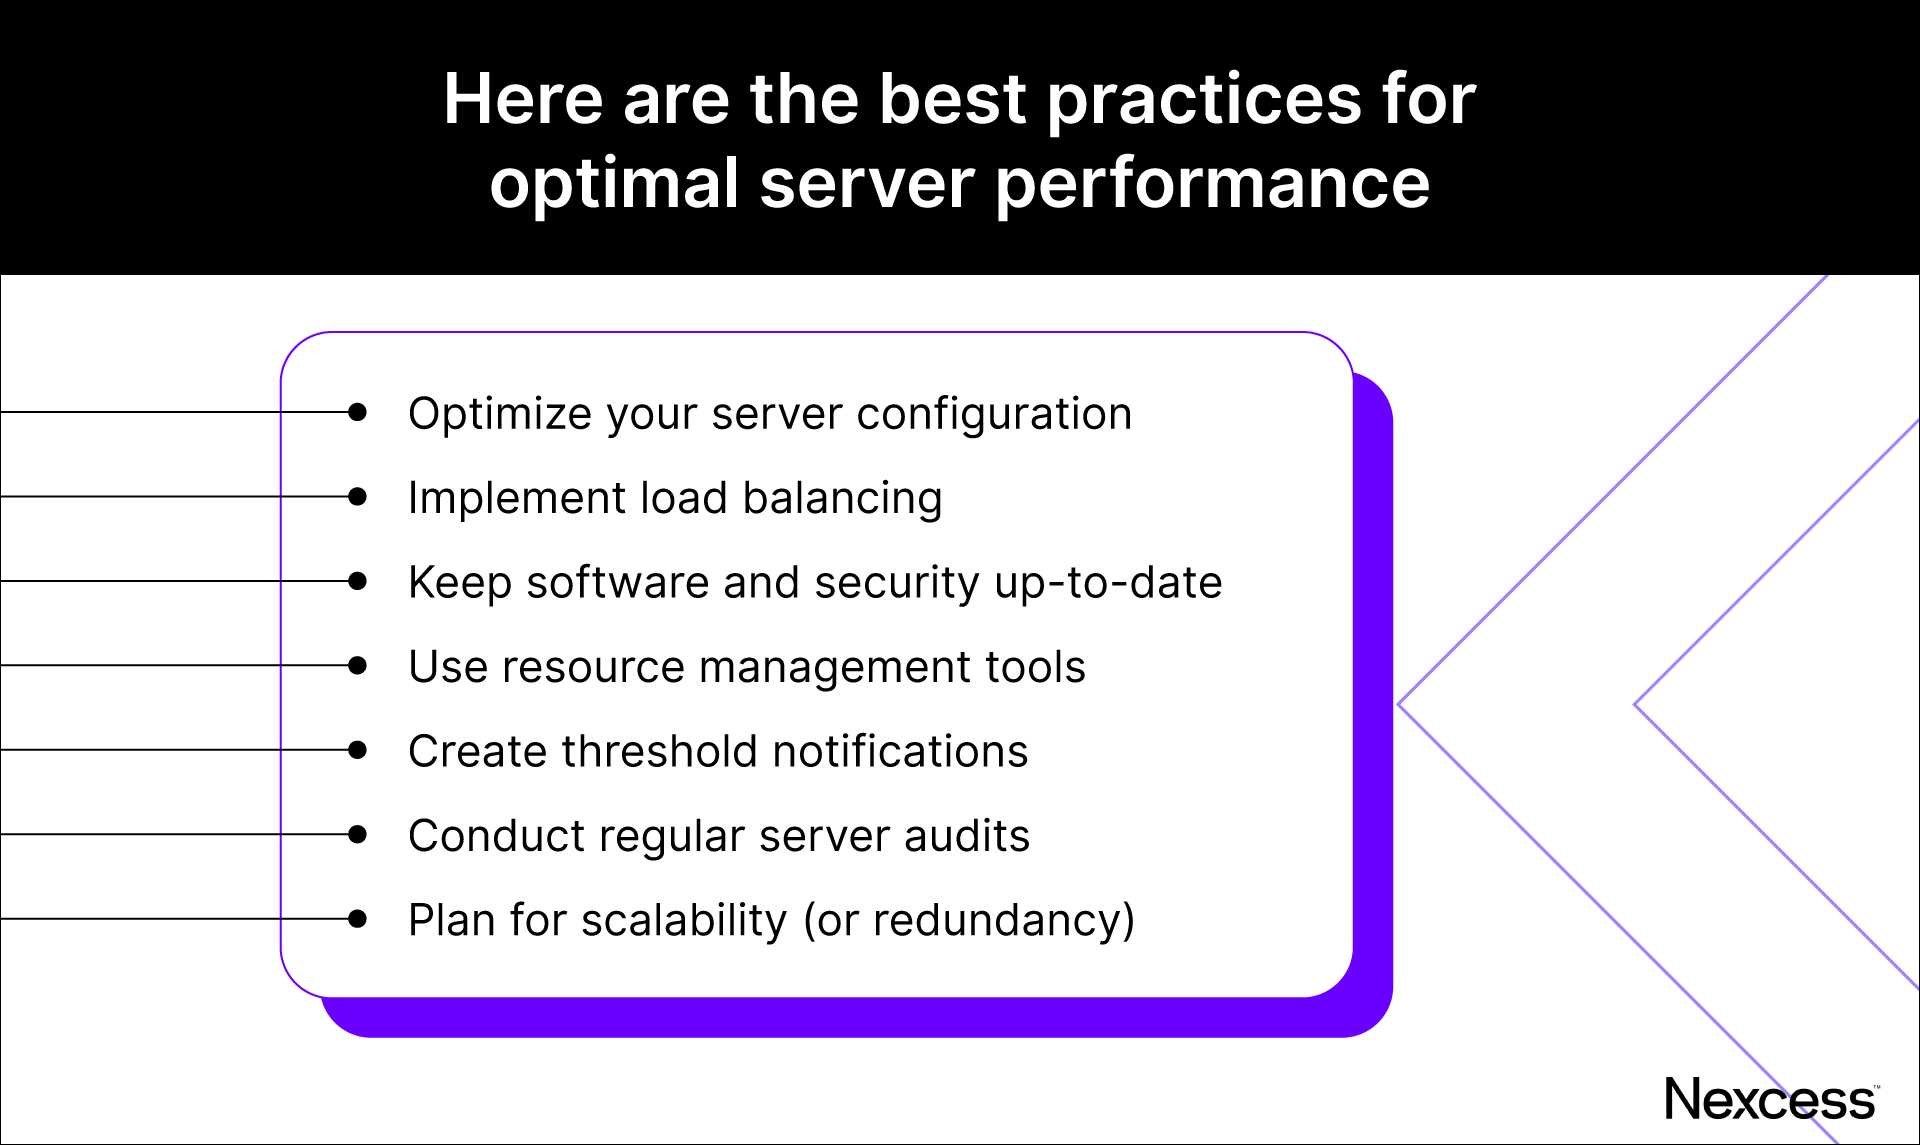 Optimal server performance best practices. 